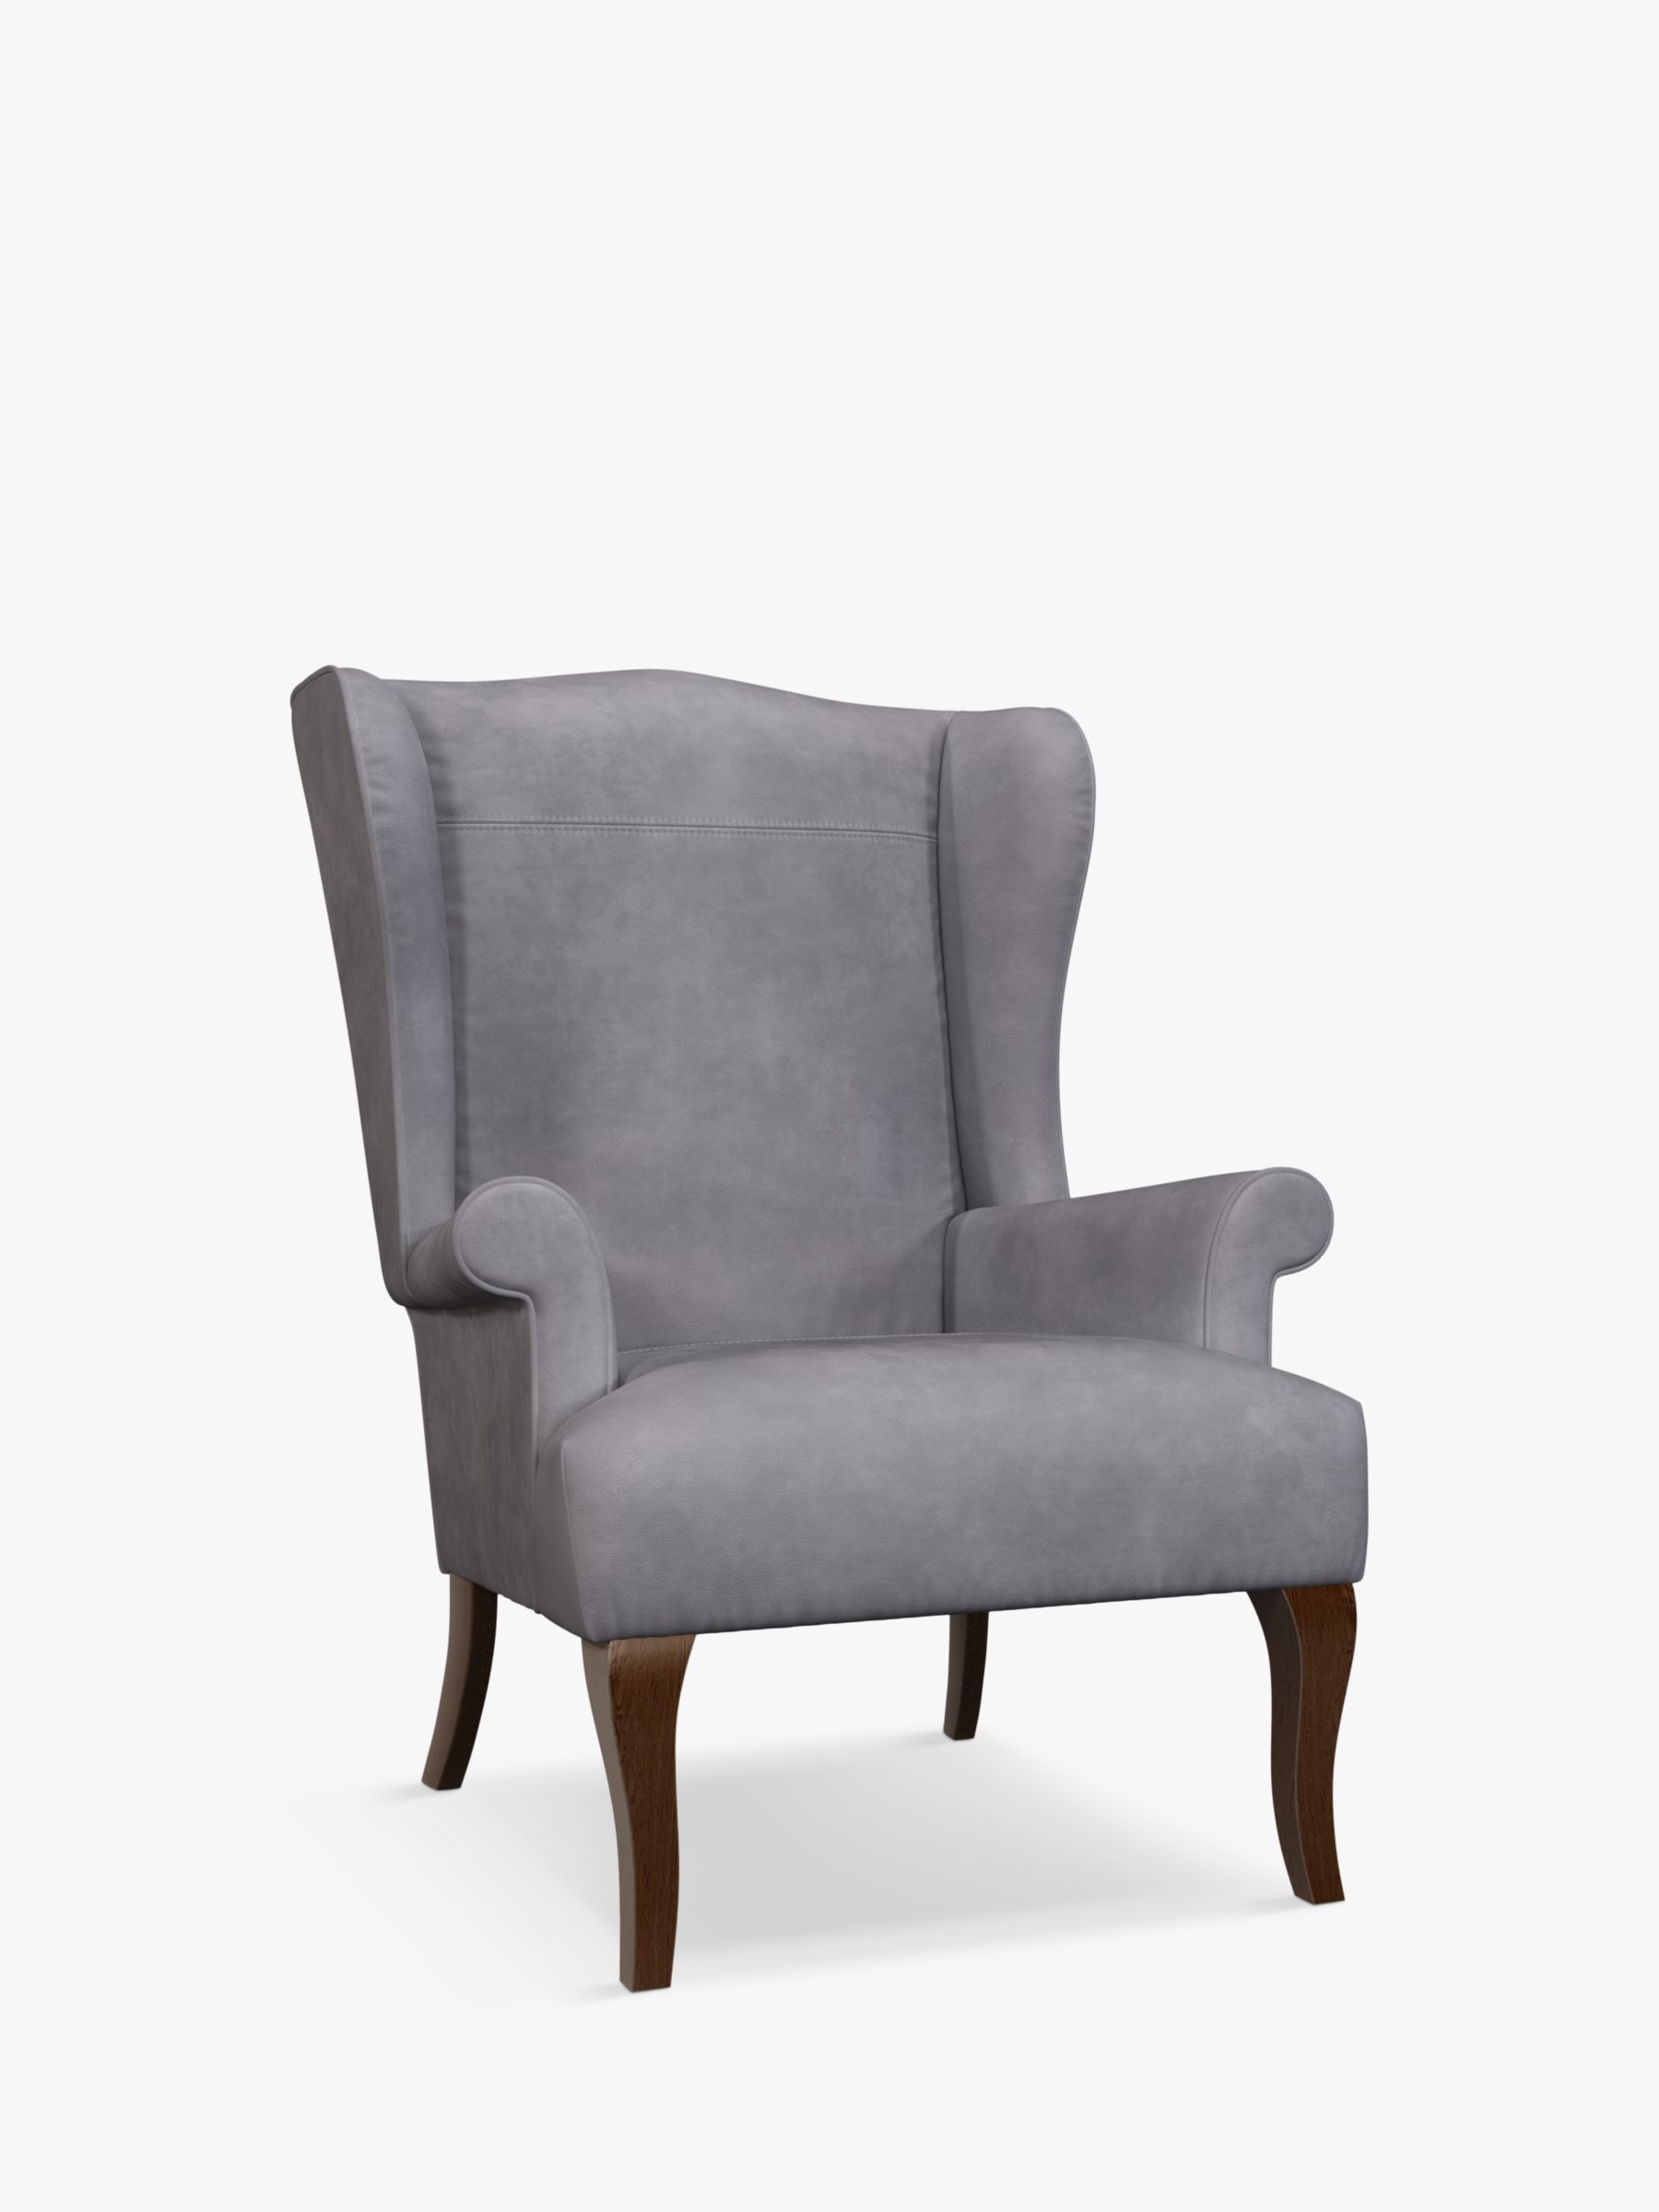 Shaftesbury Range, John Lewis Shaftesbury Leather Wing Chair, Dark Leg, Soft Touch Grey